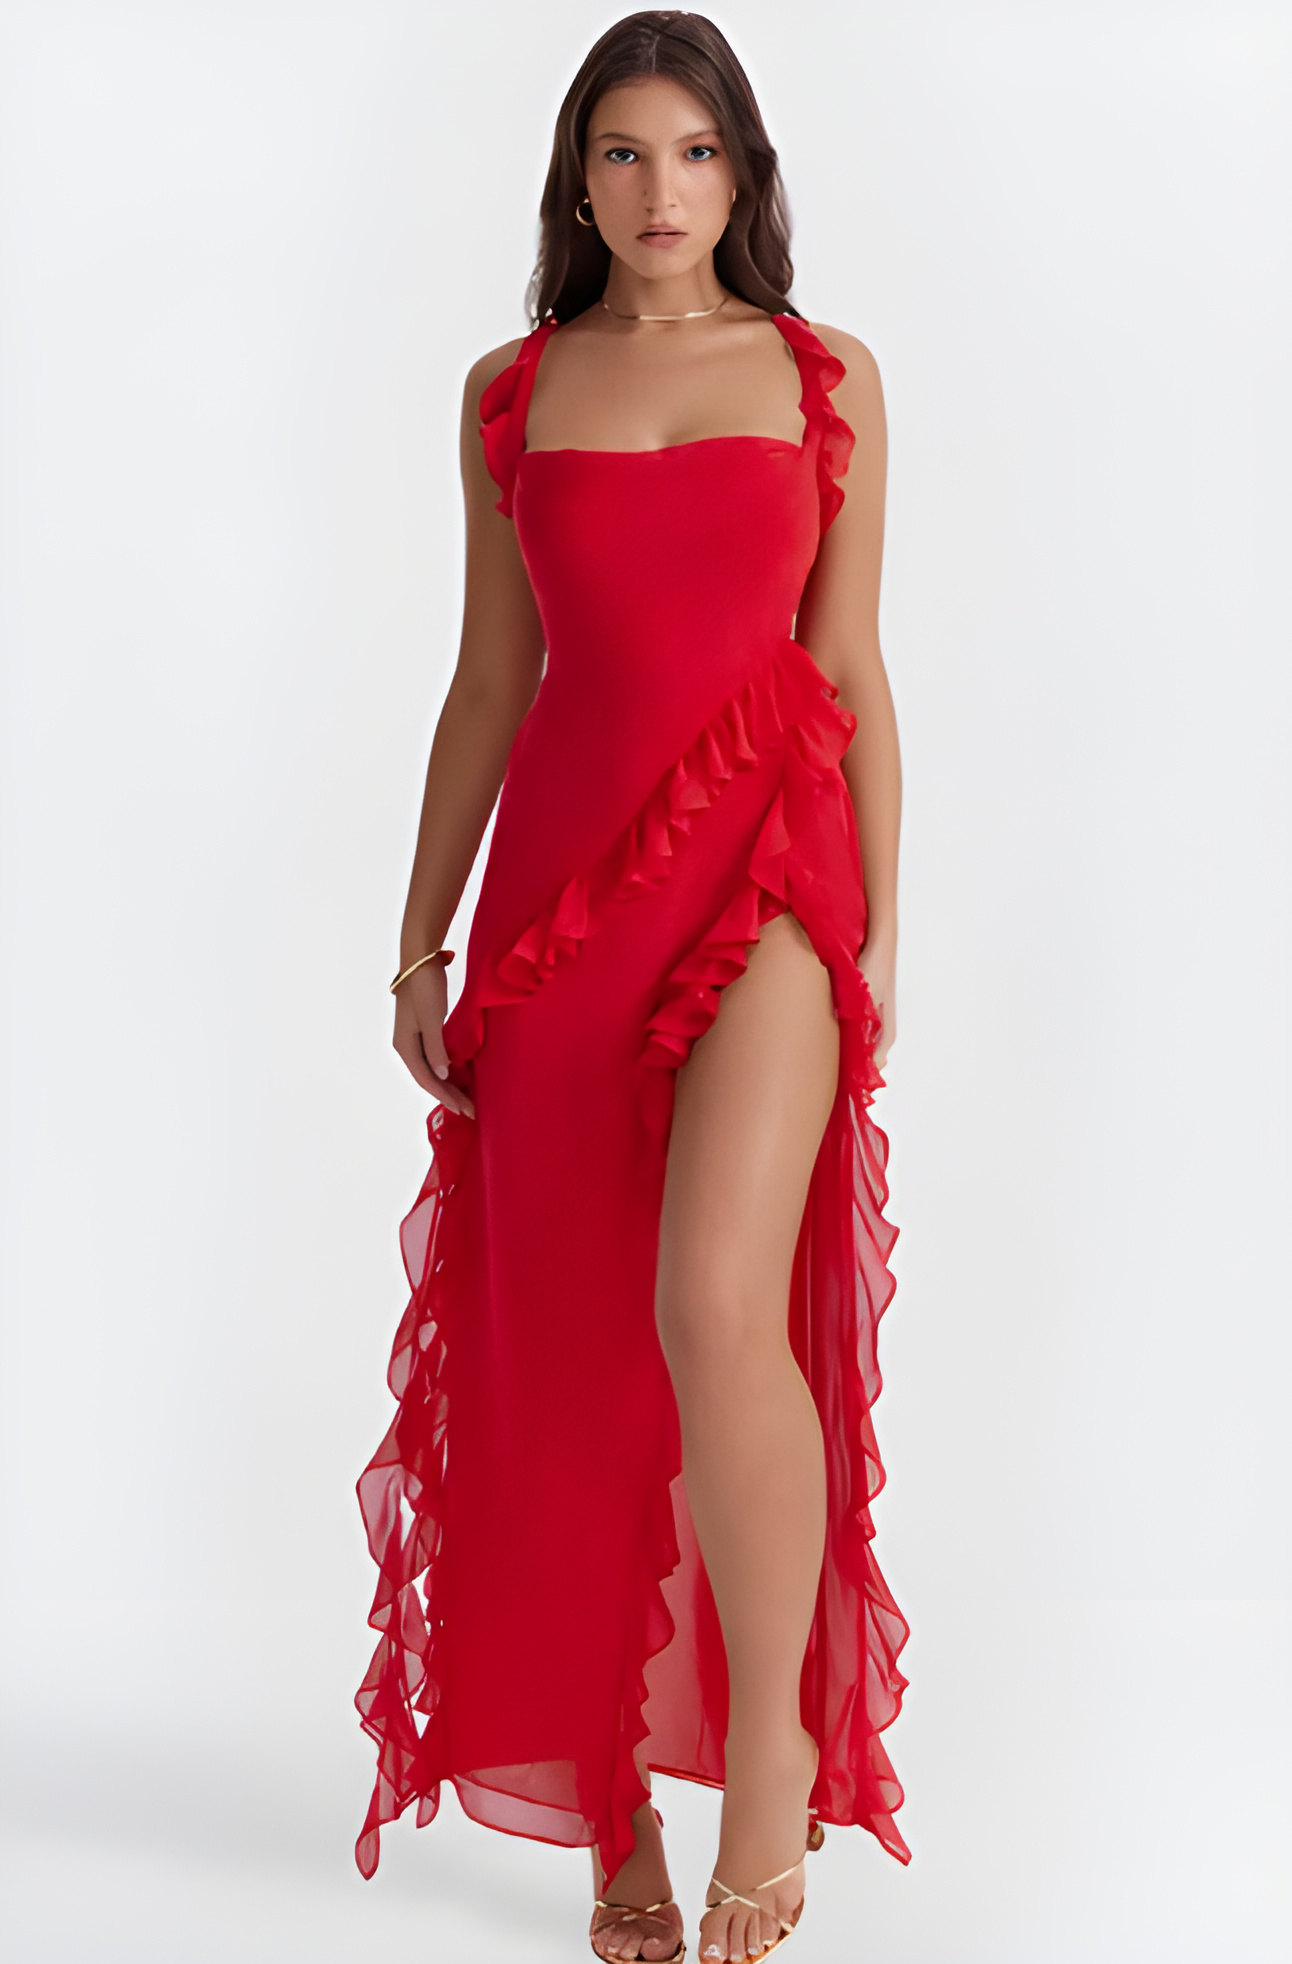 Corazo Ariana Dress | Den vackraste klänningen just nu!